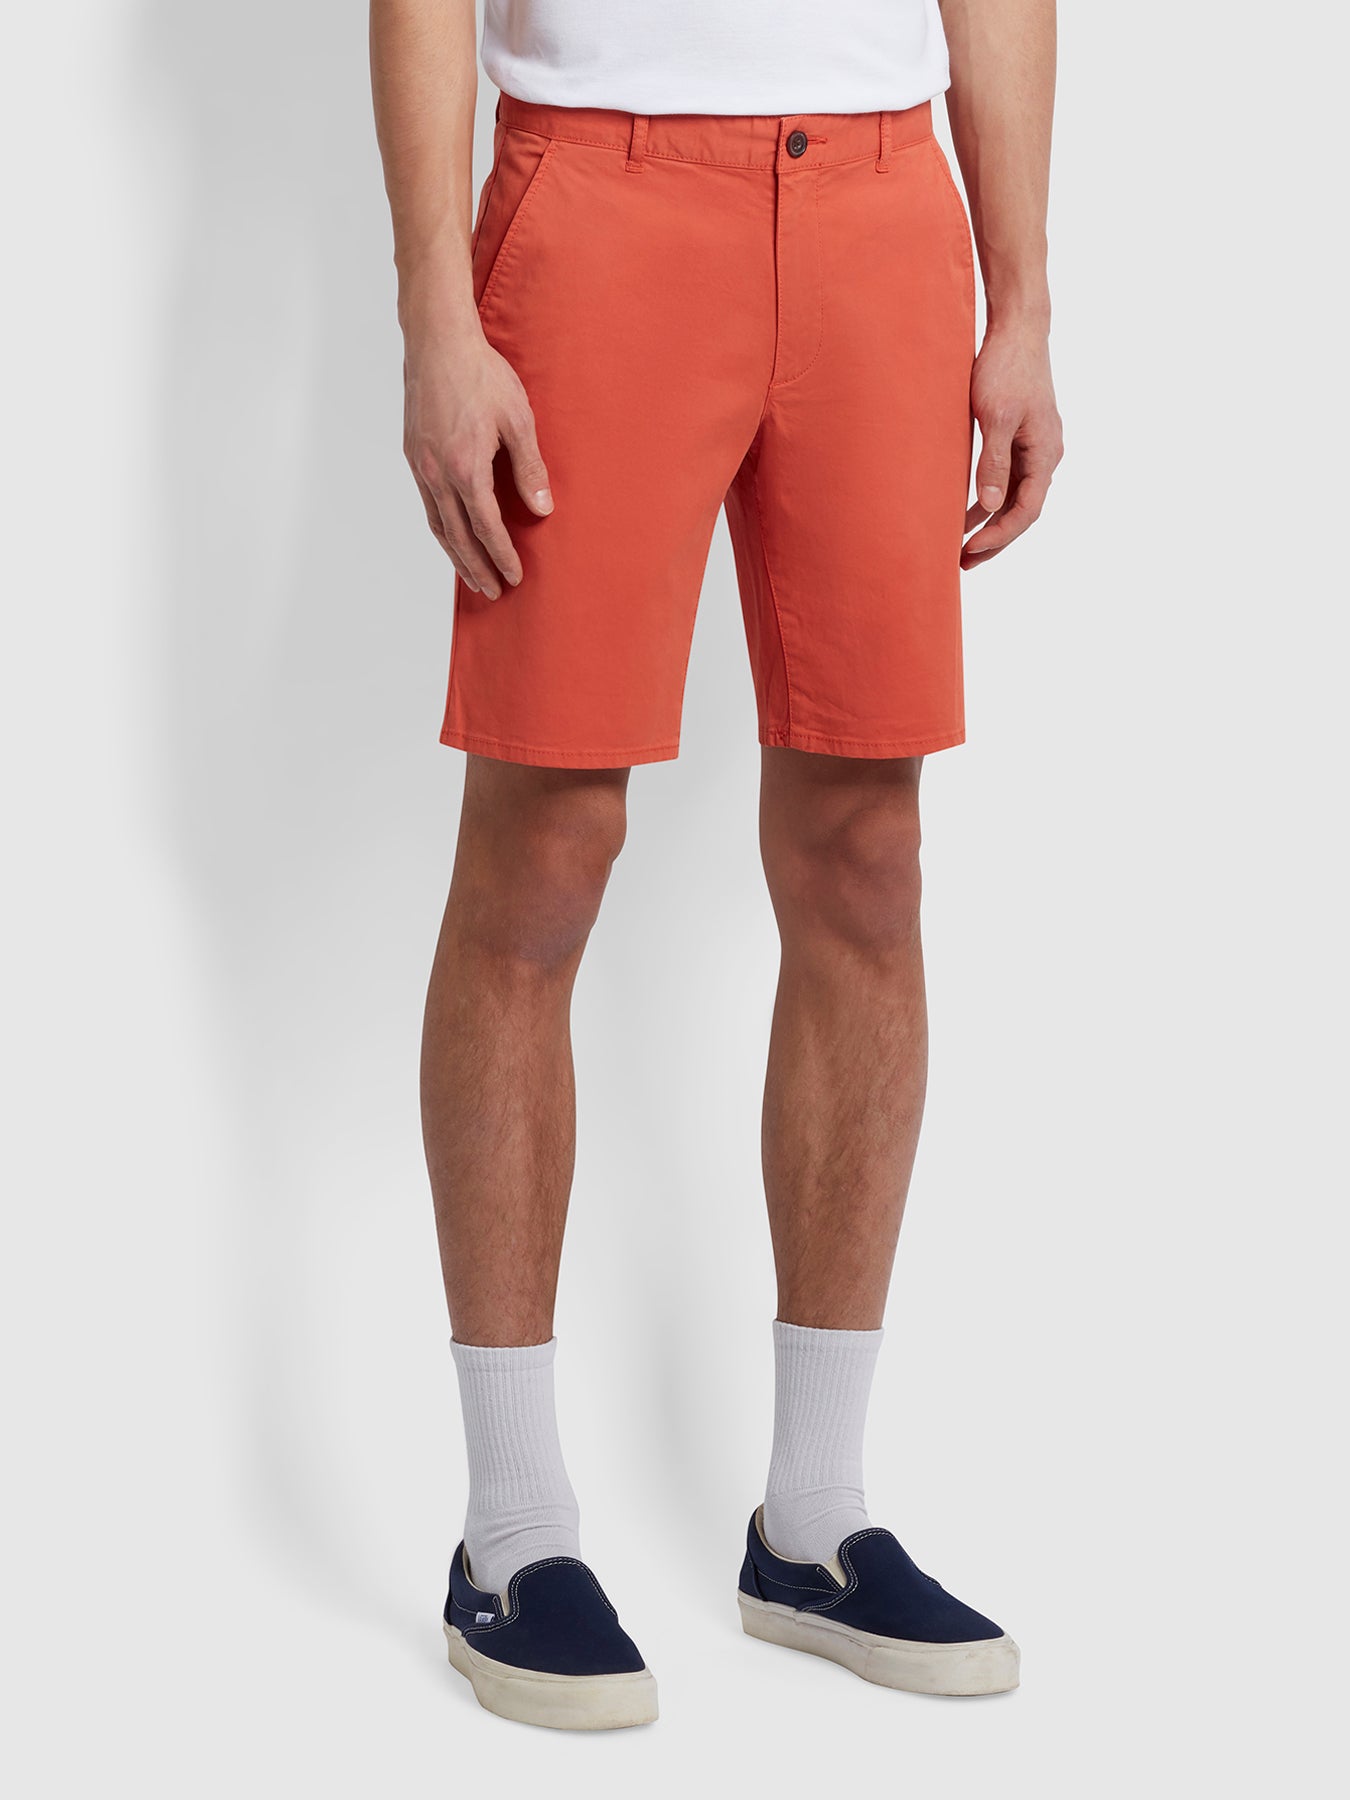 View Hawk Dyed Twill Chino Shorts In Topanga Orange information